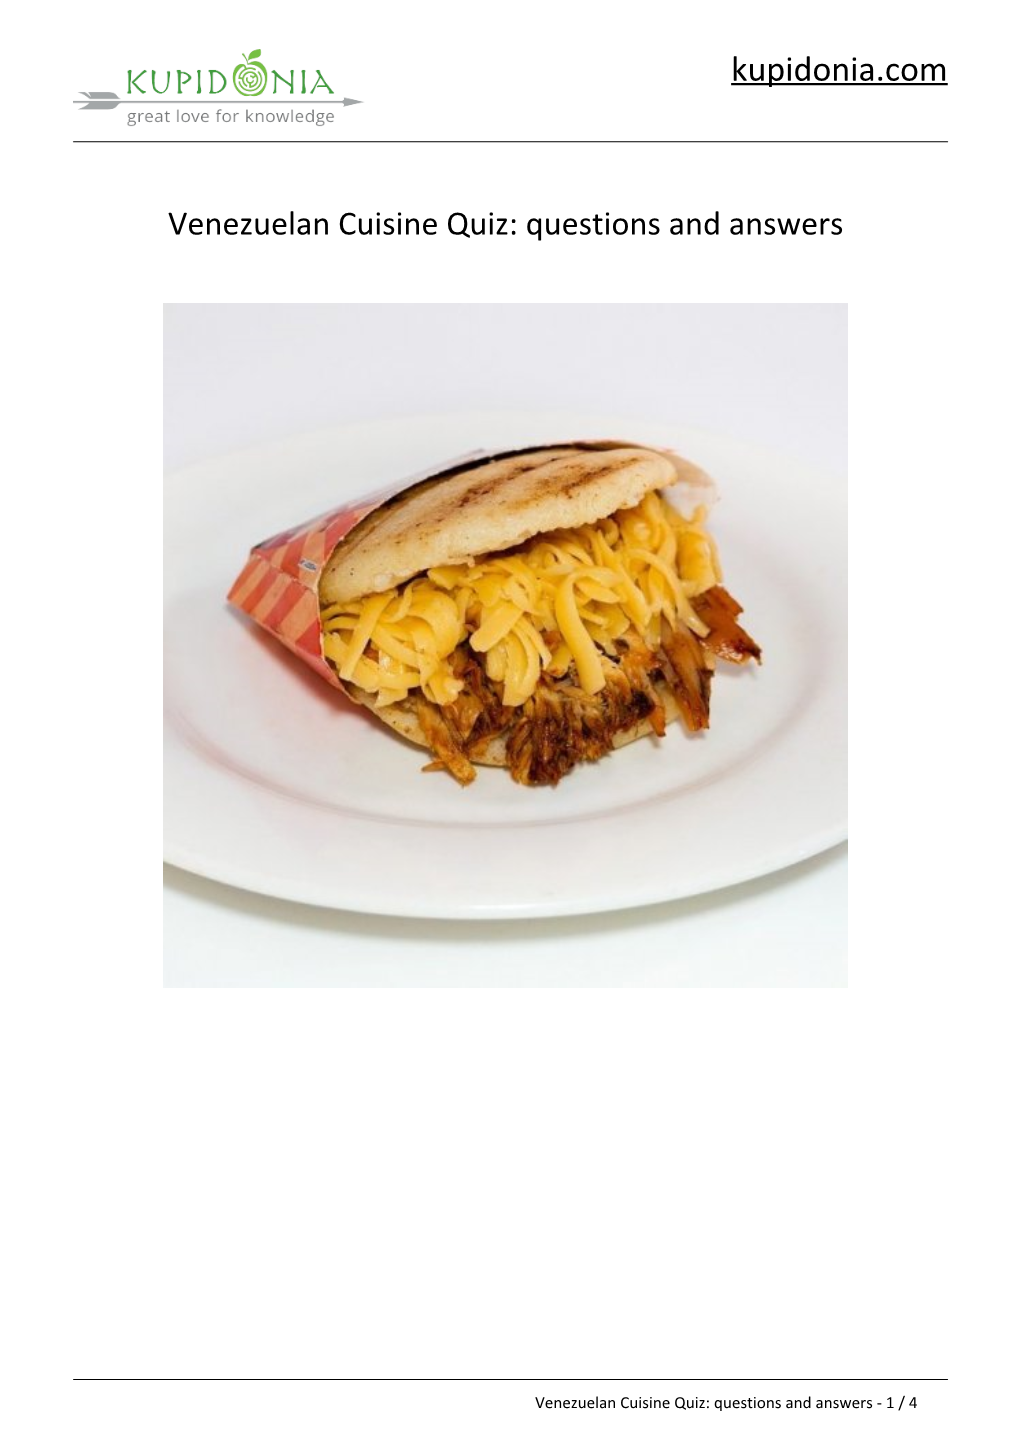 Venezuelan Cuisine Quiz: Questions and Answers